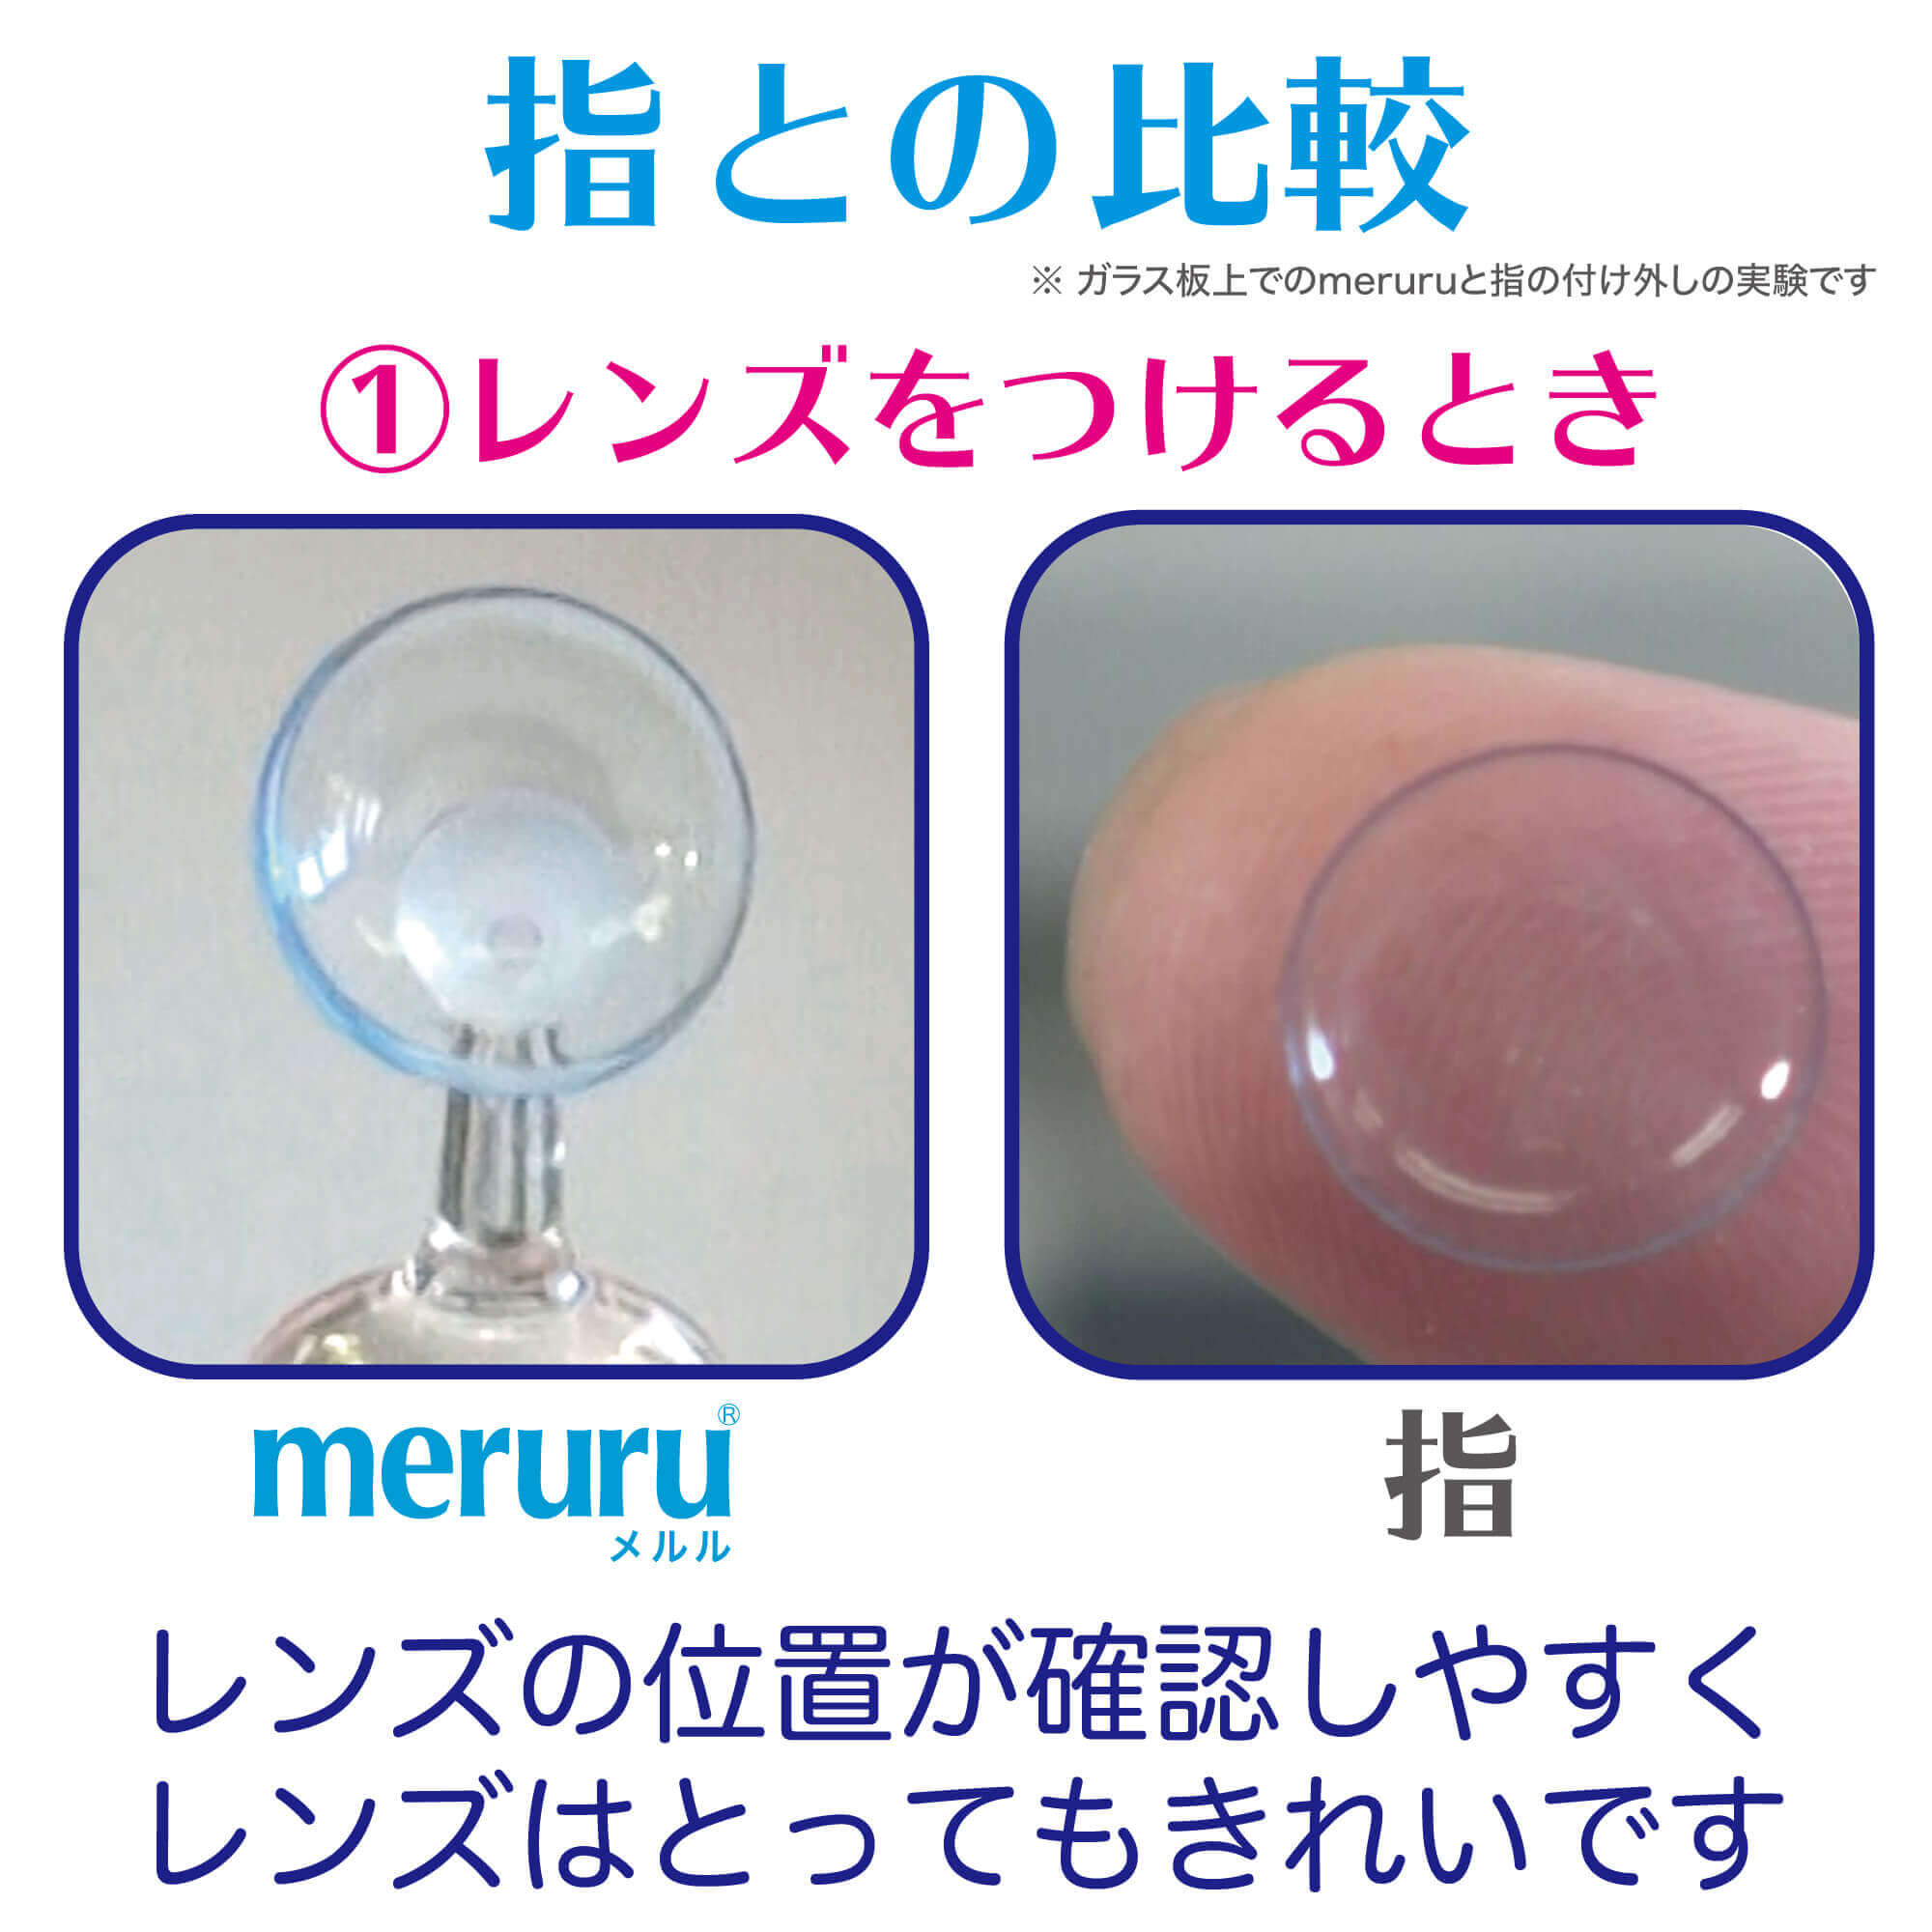 meruru（メルル）ソフト/カラーコンタクトつけはずし器具